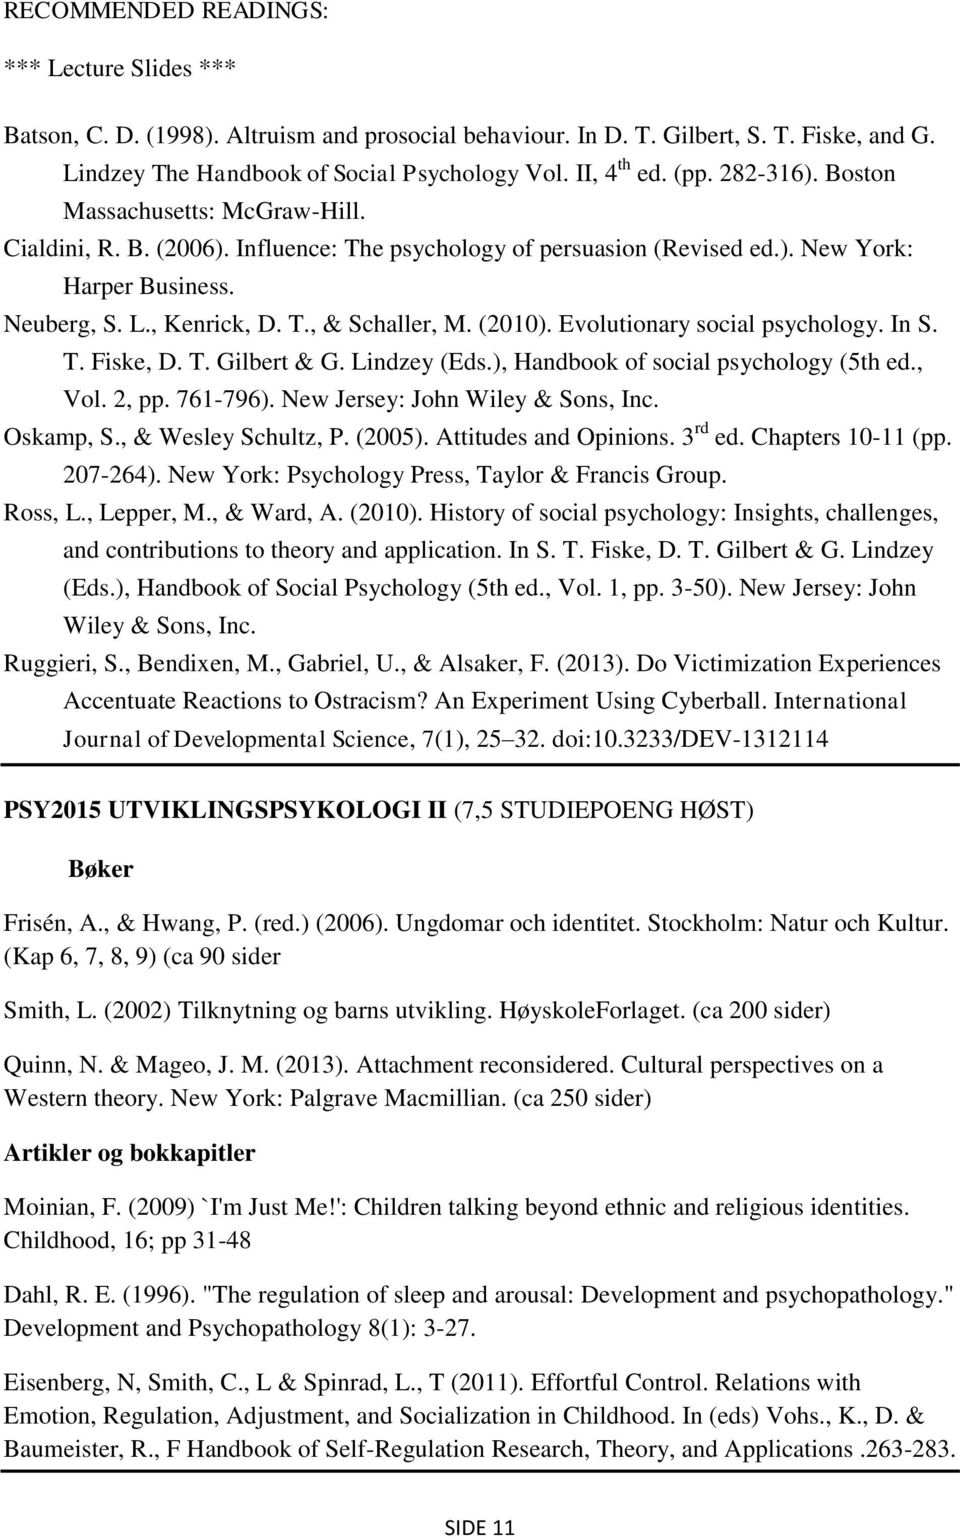 (2010). Evolutionary social psychology. In S. T. Fiske, D. T. Gilbert & G. Lindzey (Eds.), Handbook of social psychology (5th ed., Vol. 2, pp. 761-796). New Jersey: John Wiley & Sons, Inc. Oskamp, S.